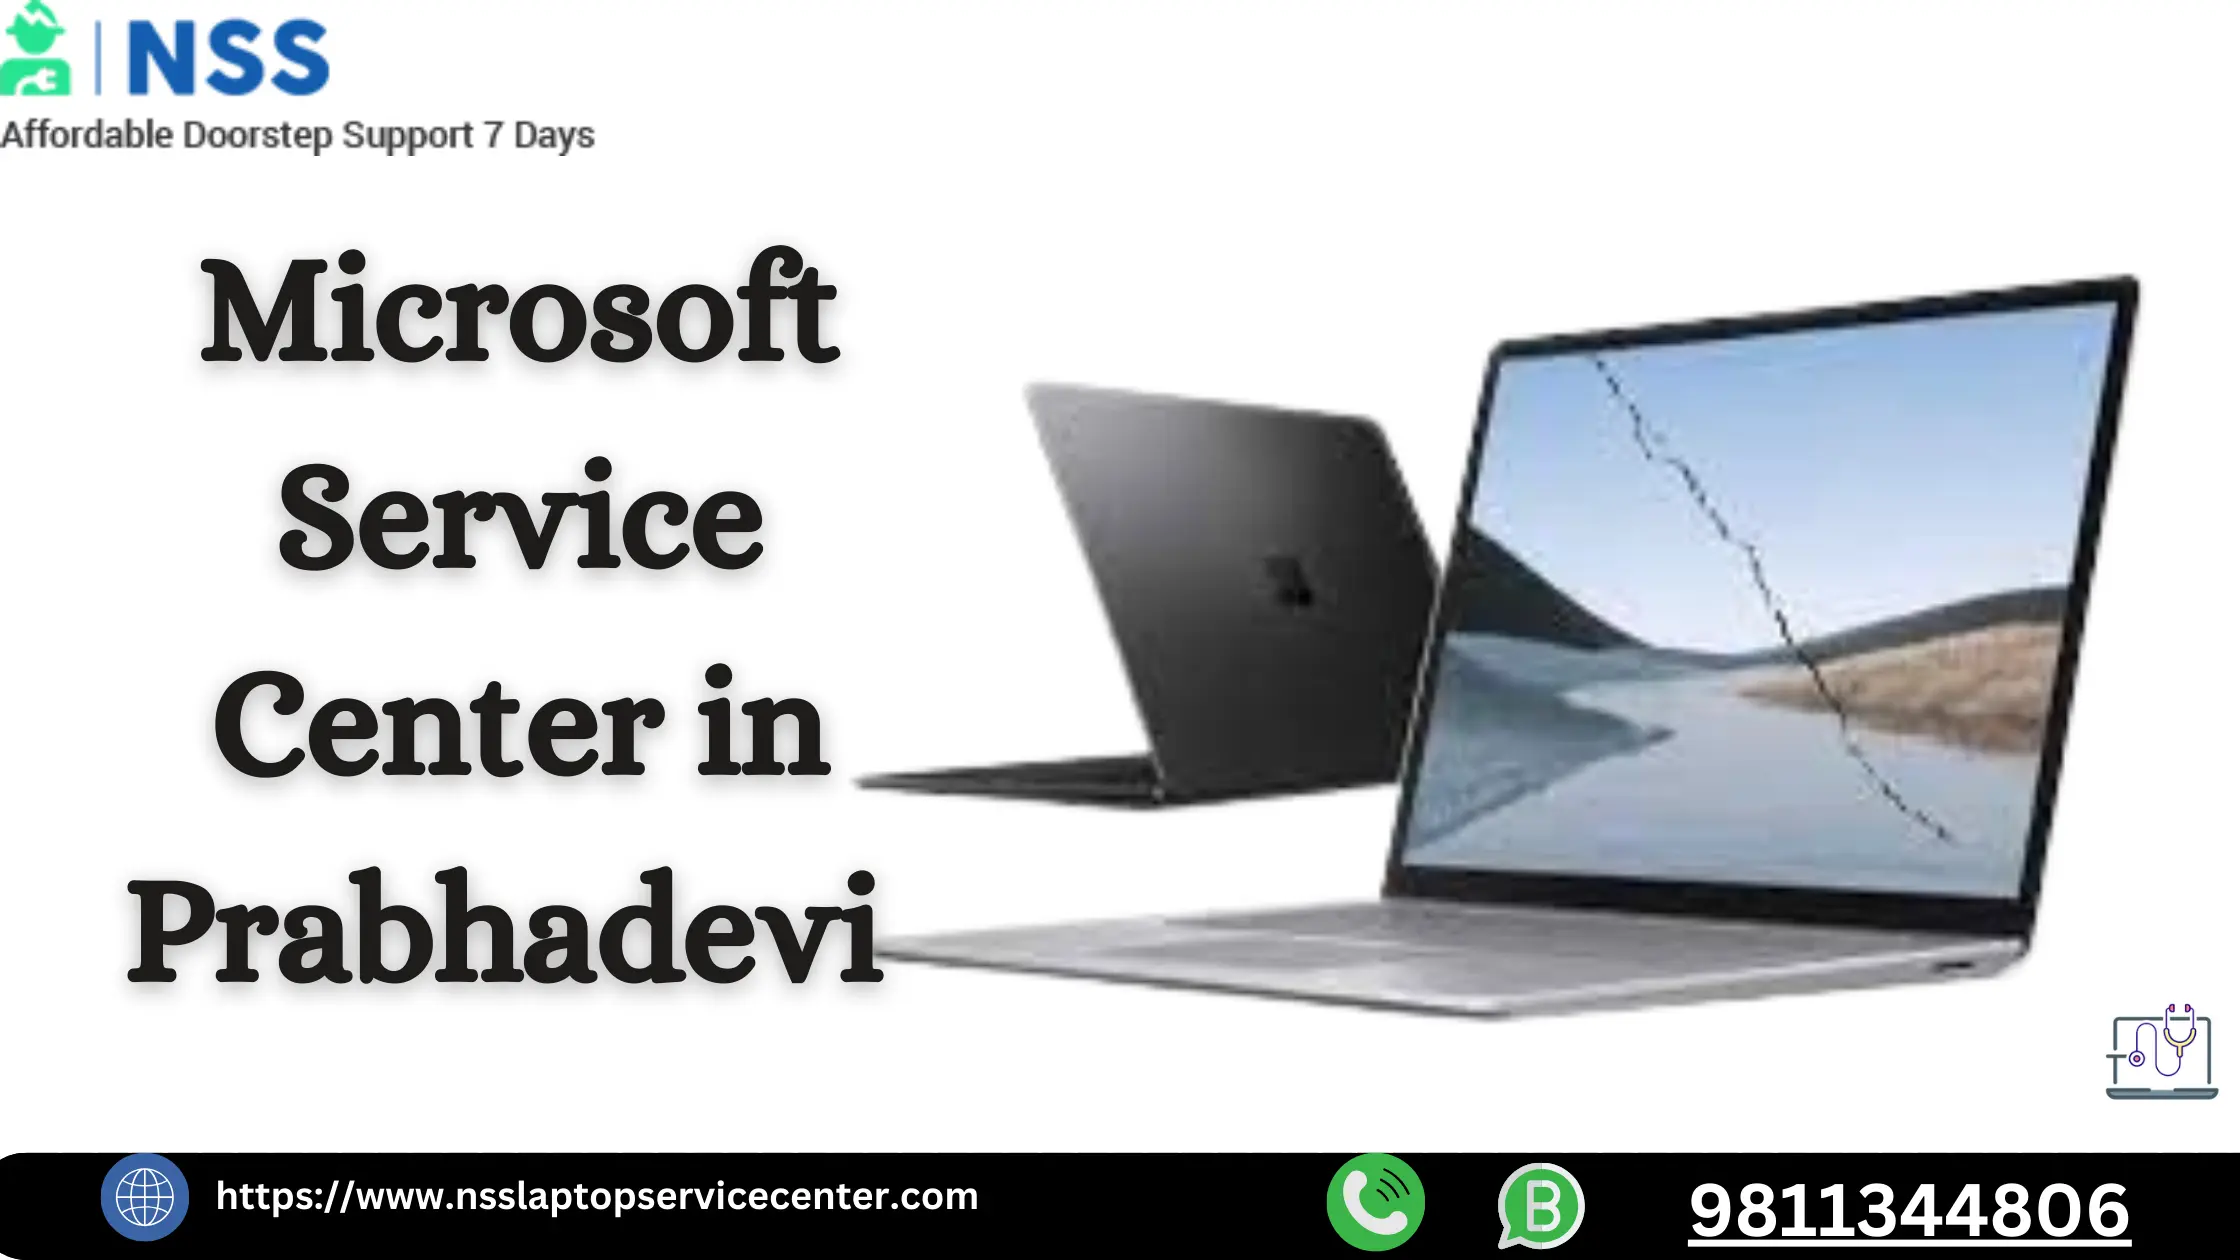 Microsoft Service Center in Prabhadevi Near Mumbai